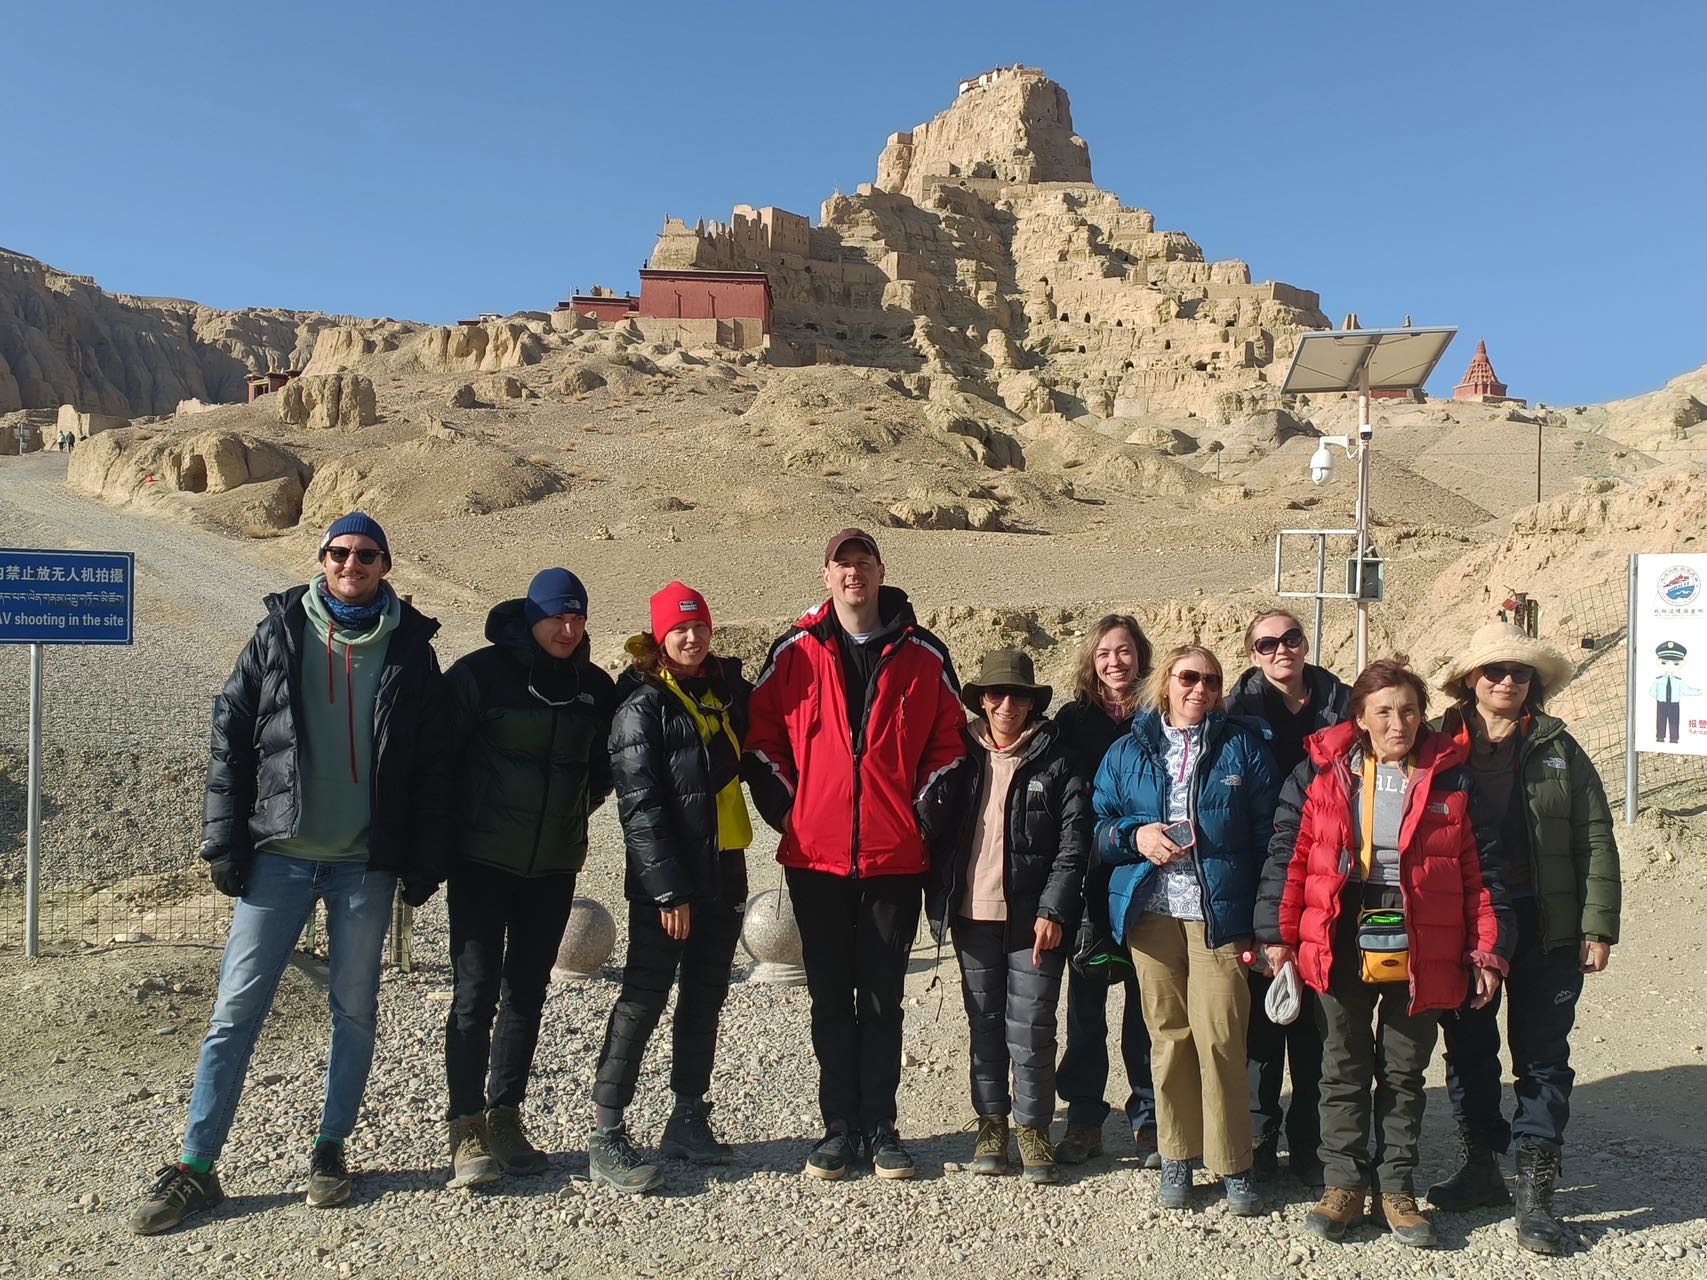 Lhasa, Mt. Kailash, and Guge Kingdom Trek: Exploring the ancient wonders of Guge Kingdom along the way